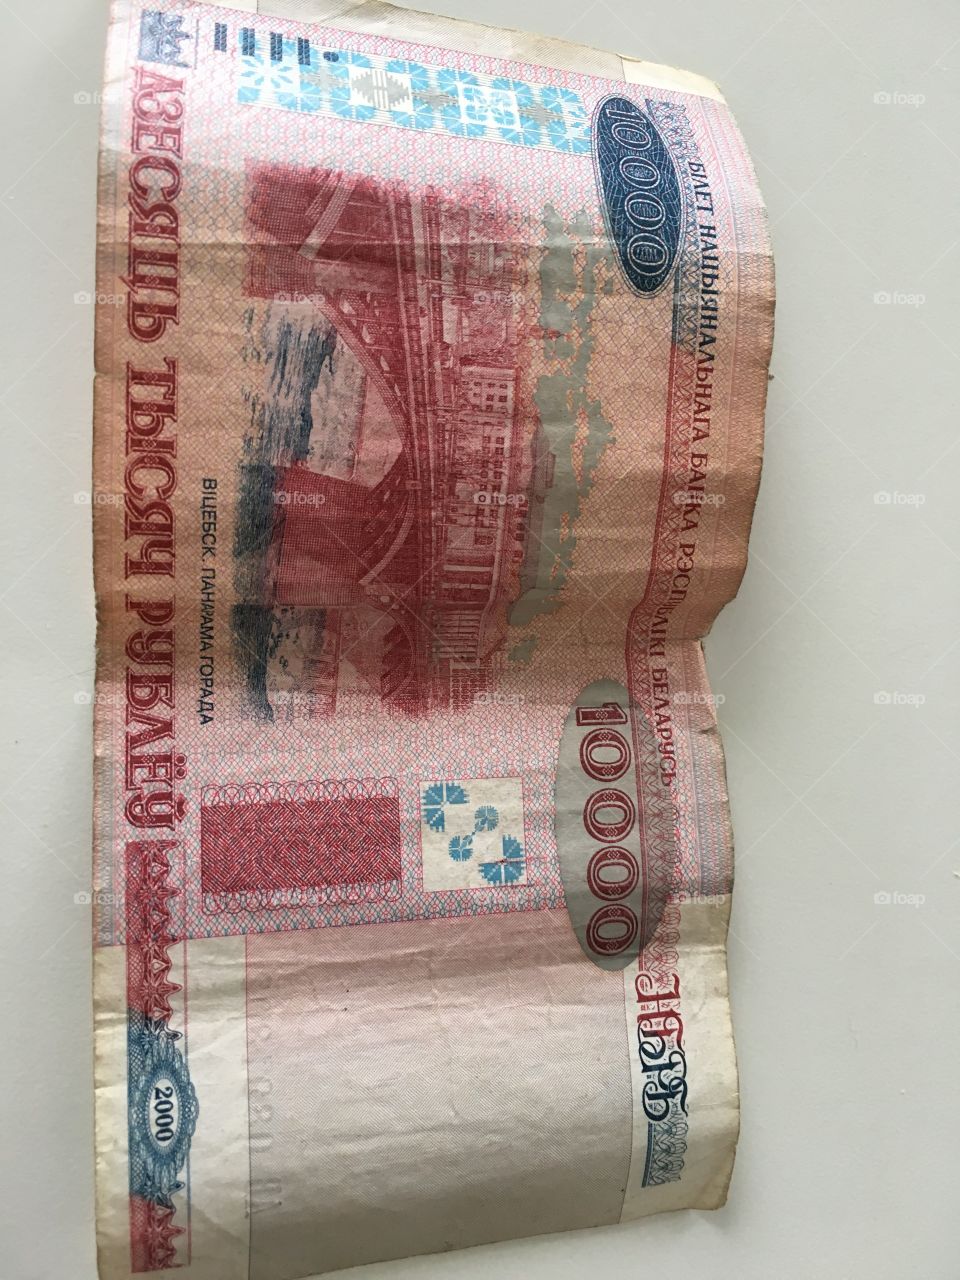 Belarus money about 0.10 euro cents 